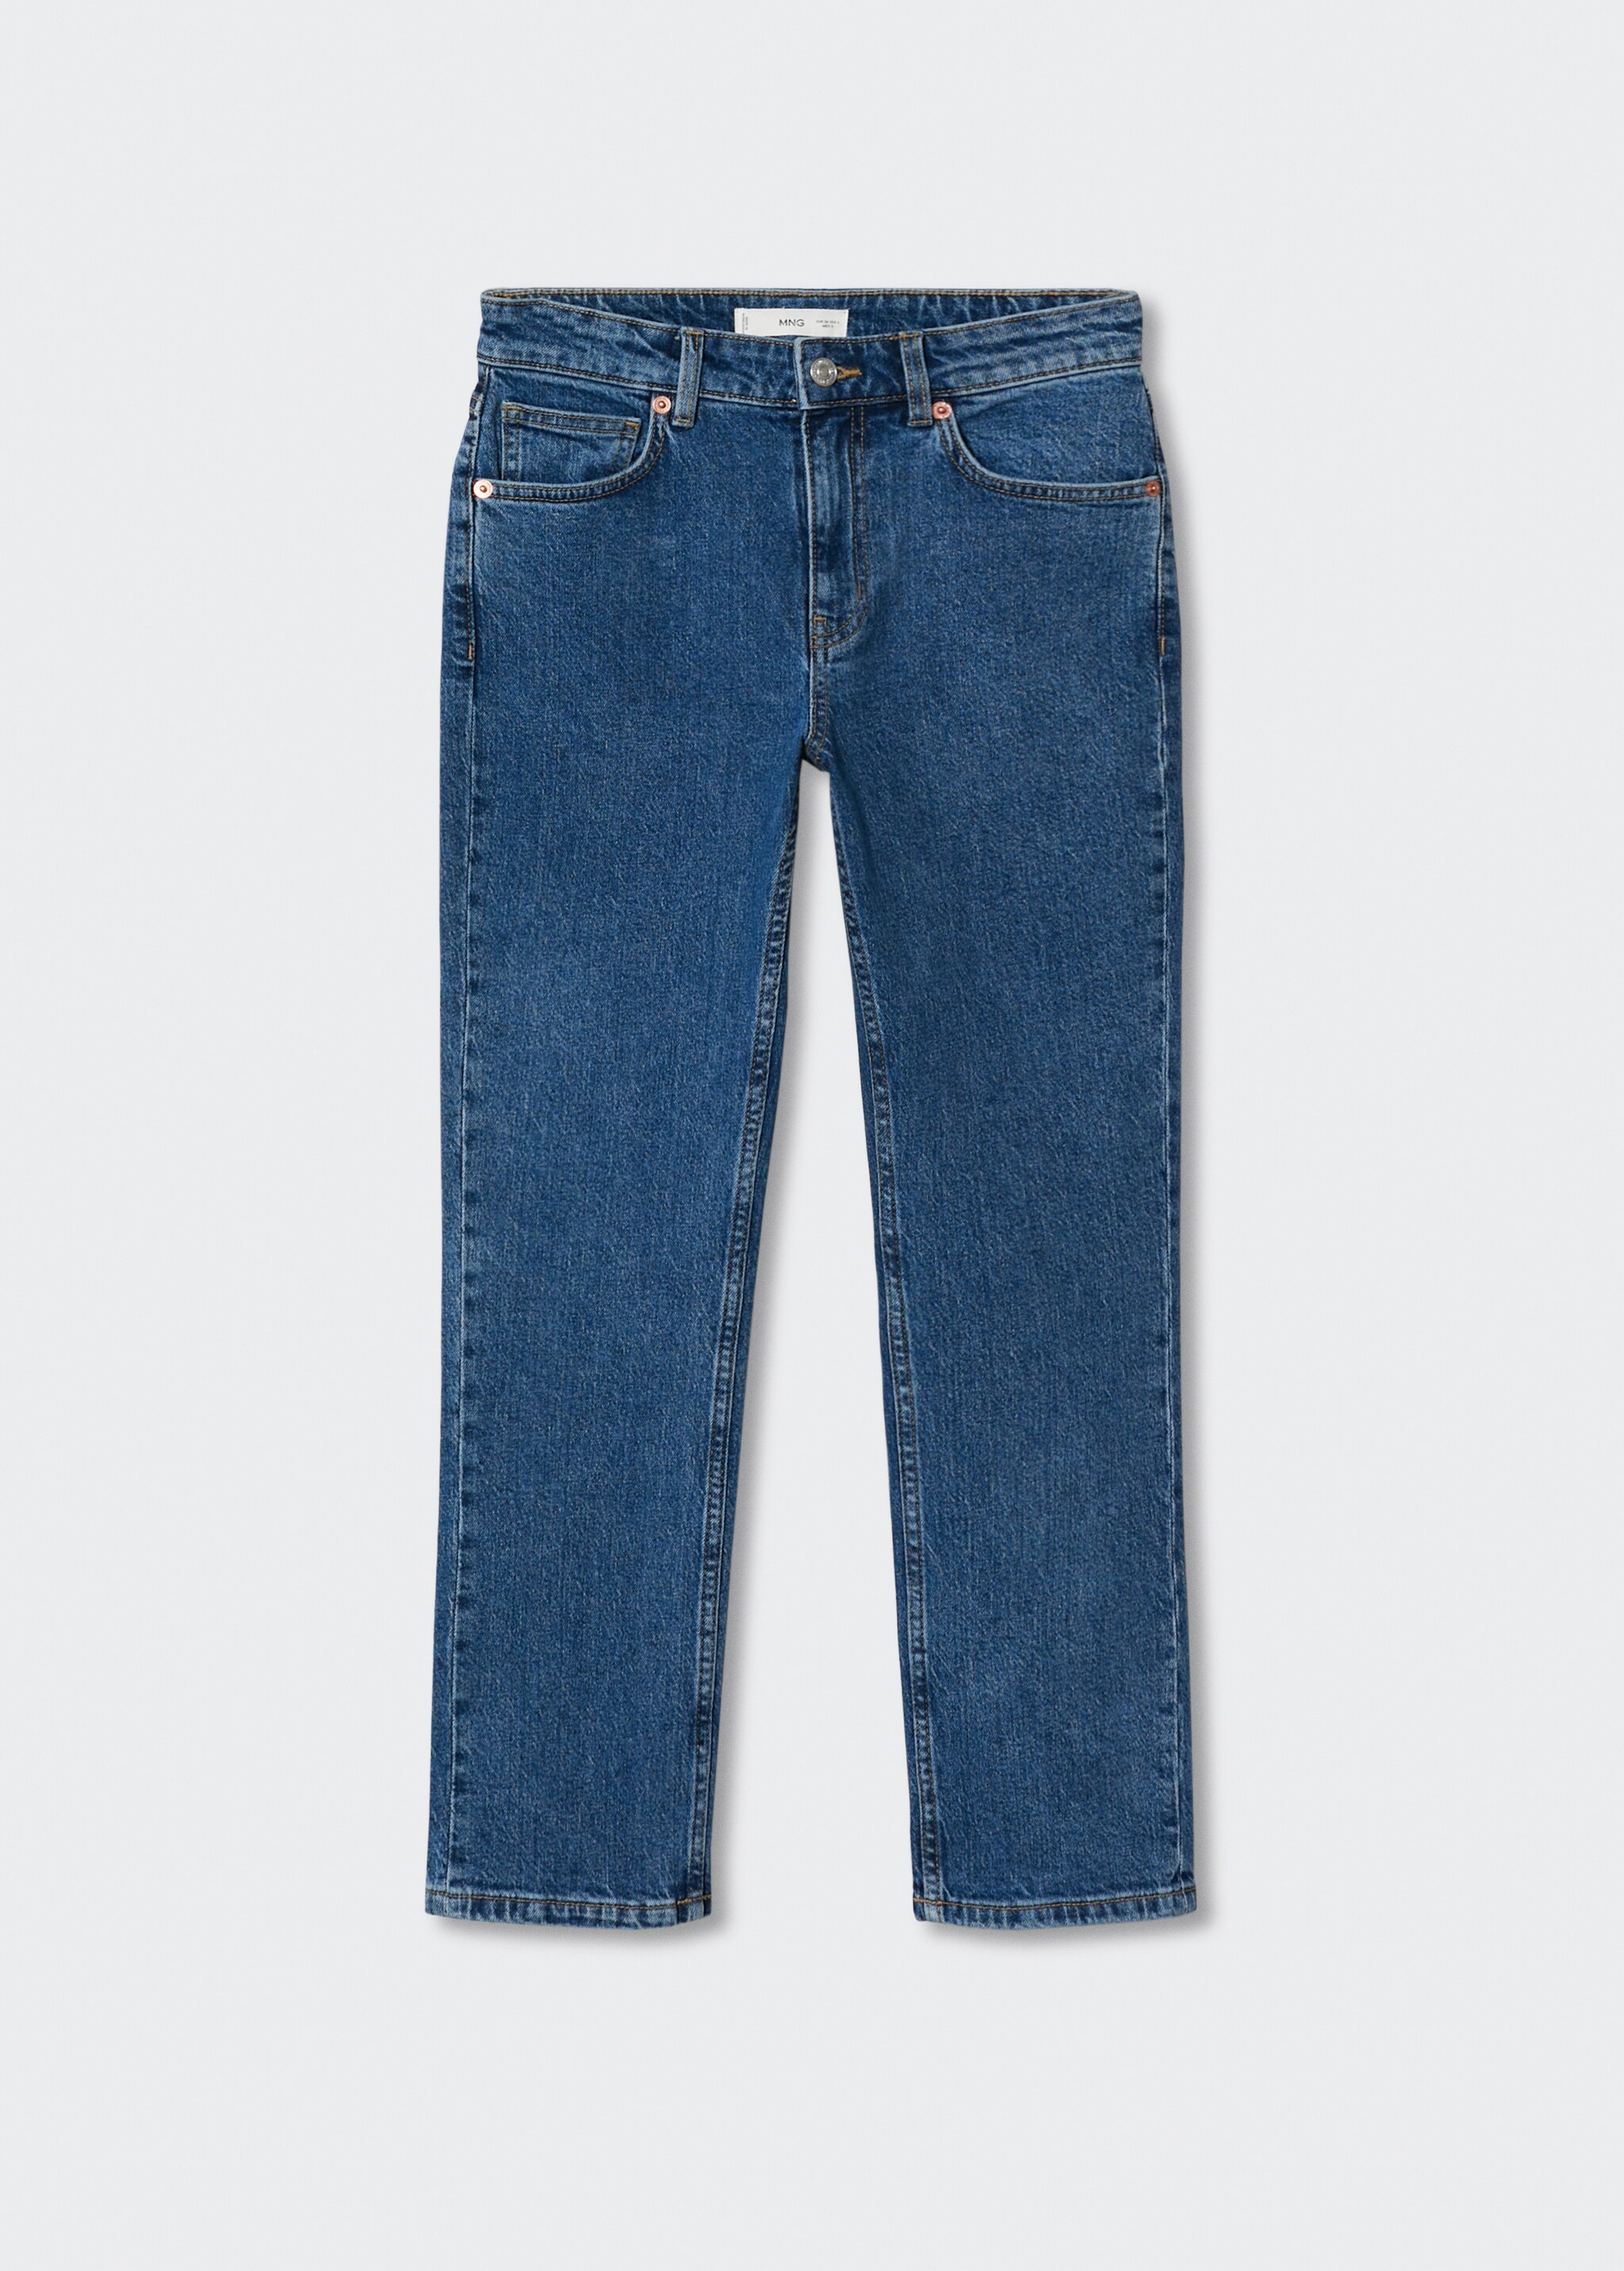 Jeans flare tiro medio - Artículo sin modelo